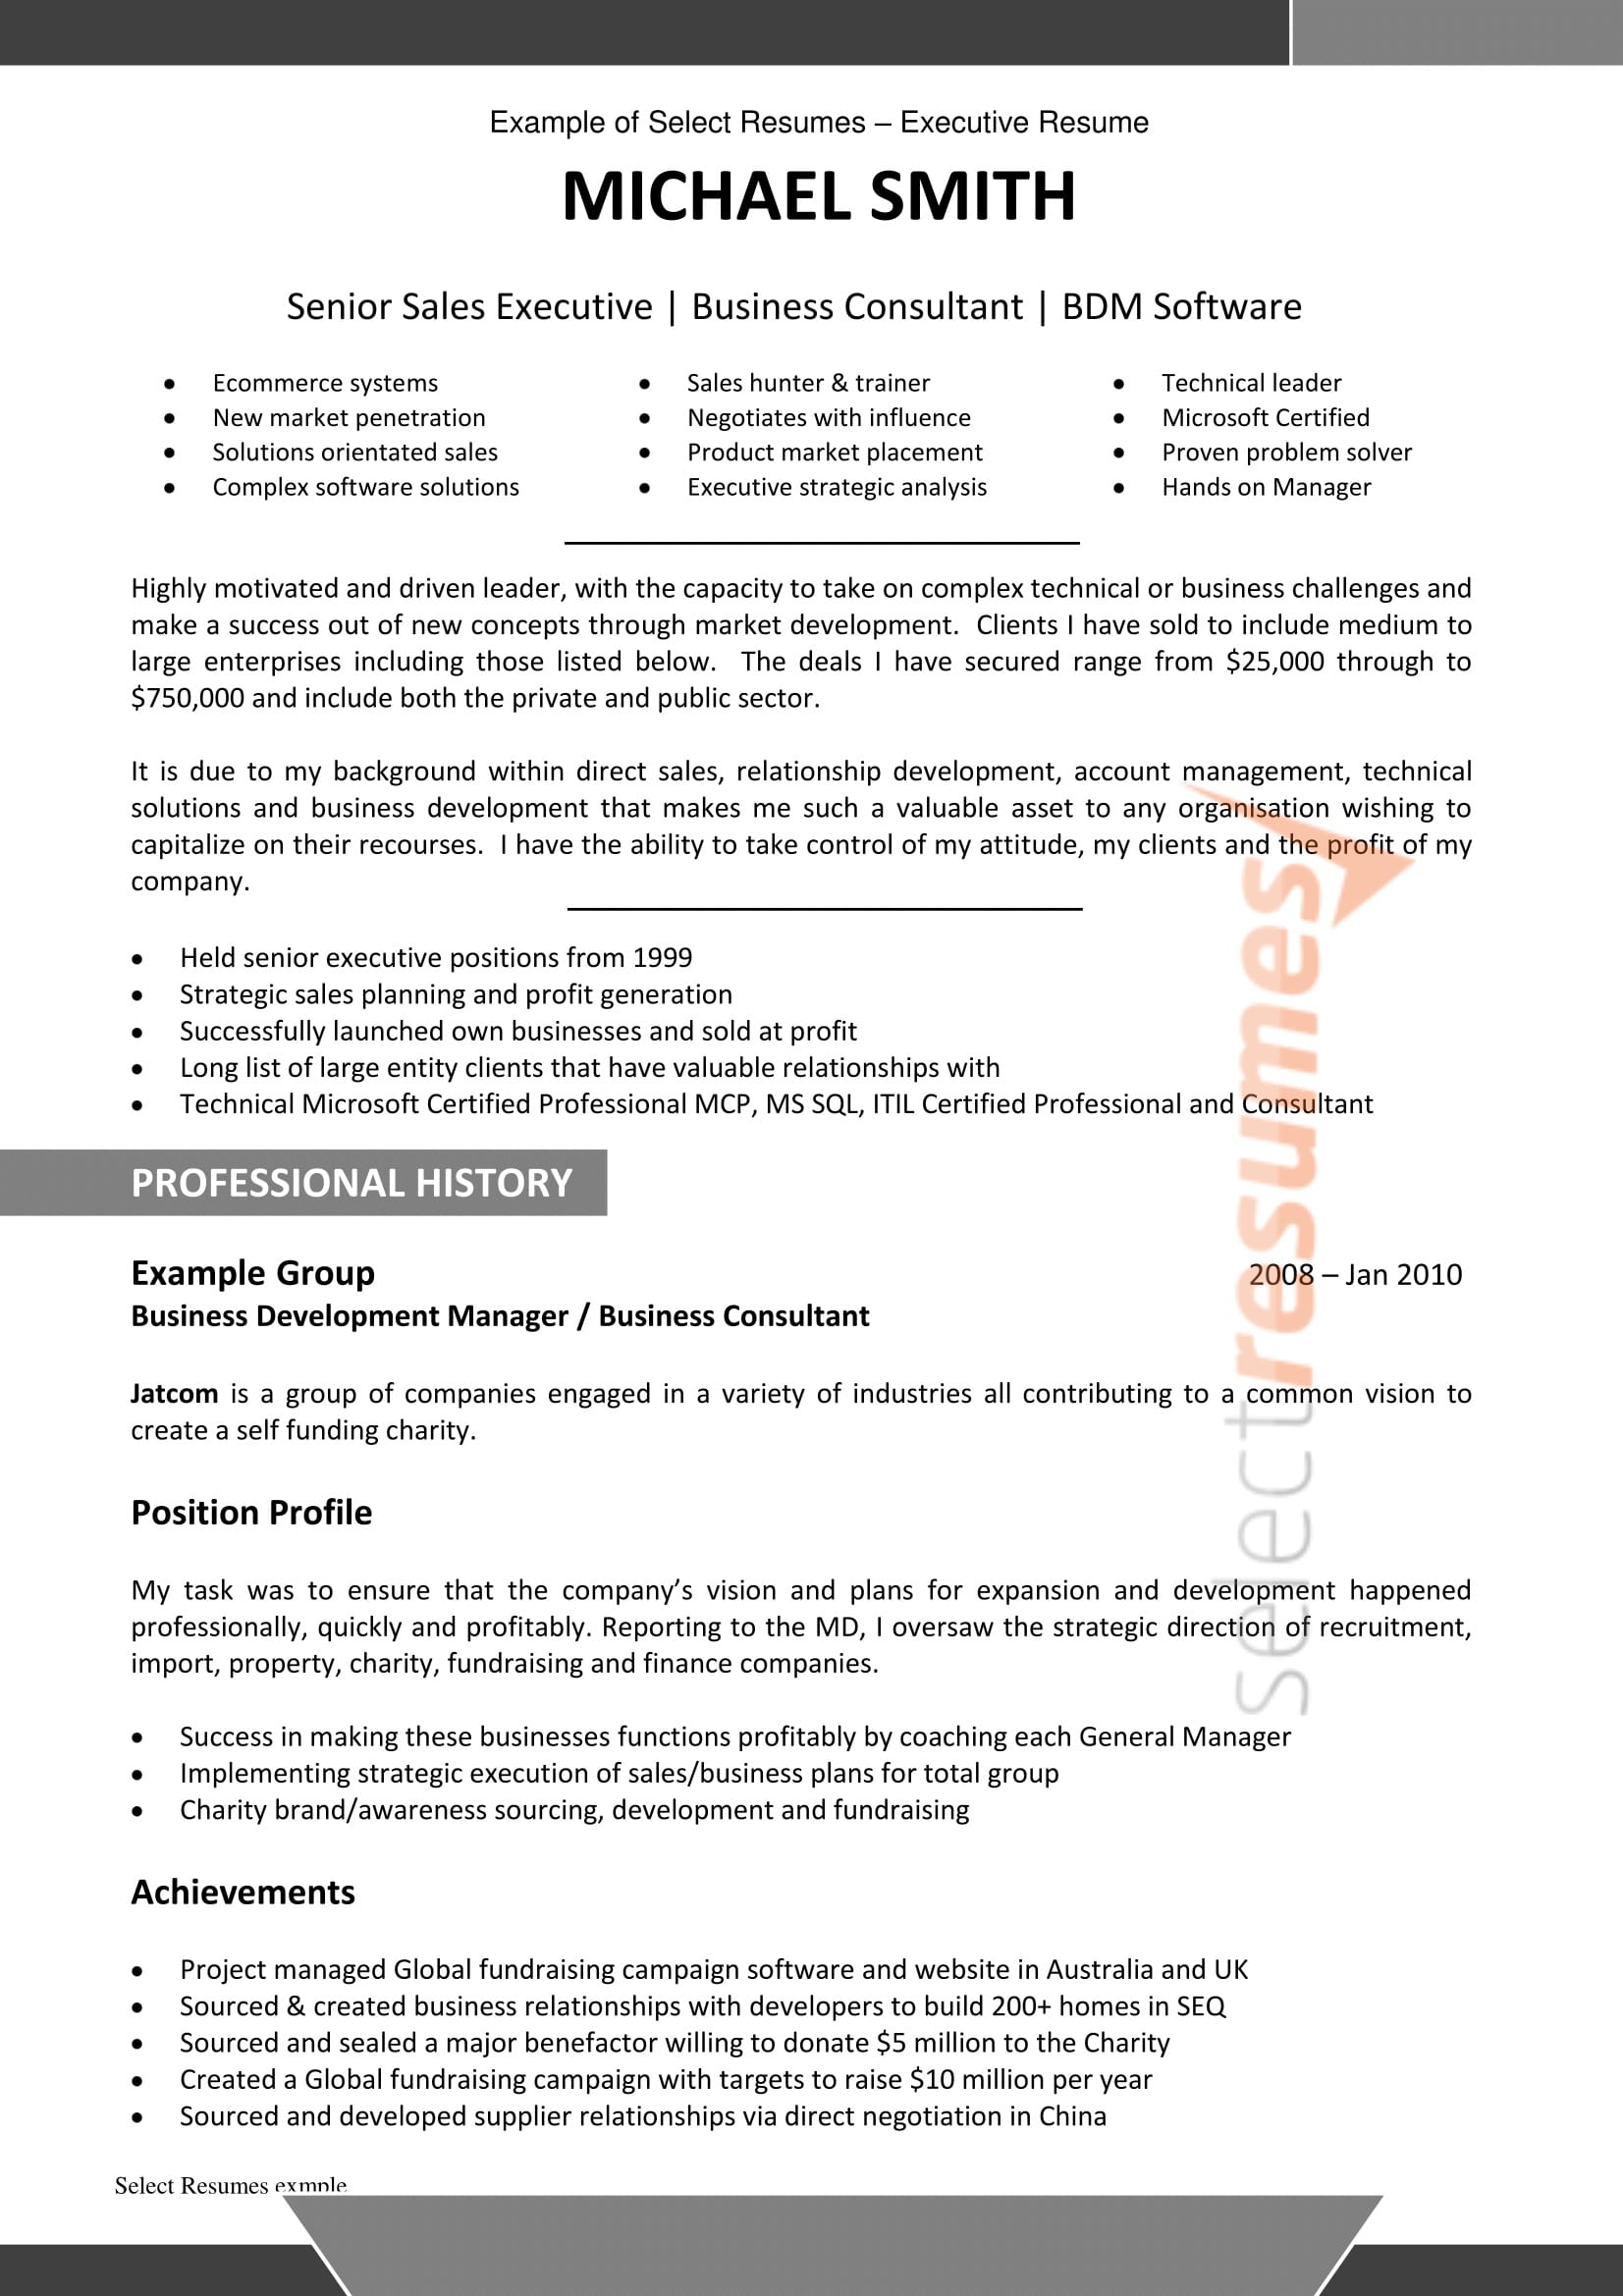 Professional Resume Writers Executive 211 1 professional resume writers|wikiresume.com